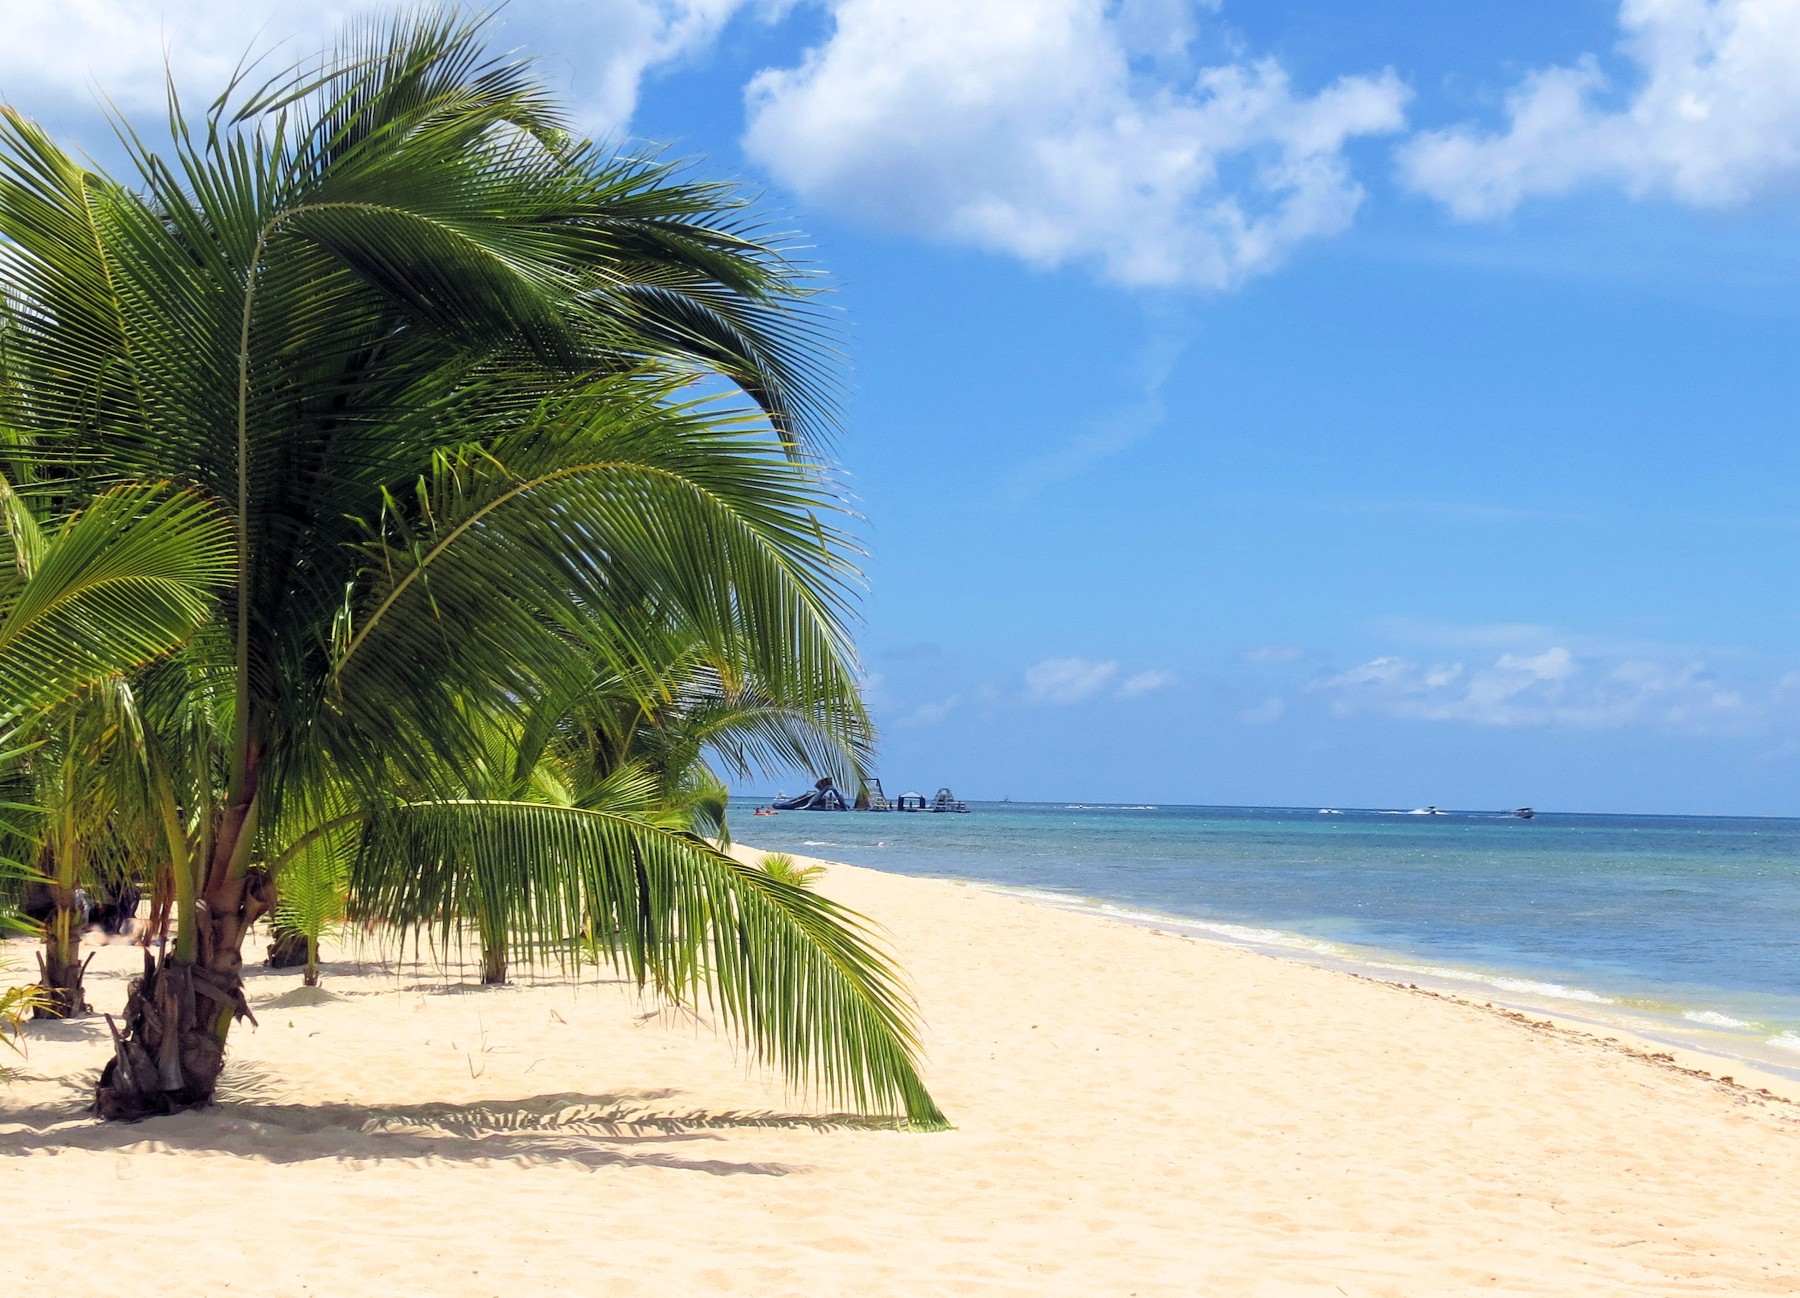 beach an palm tree in cozumel